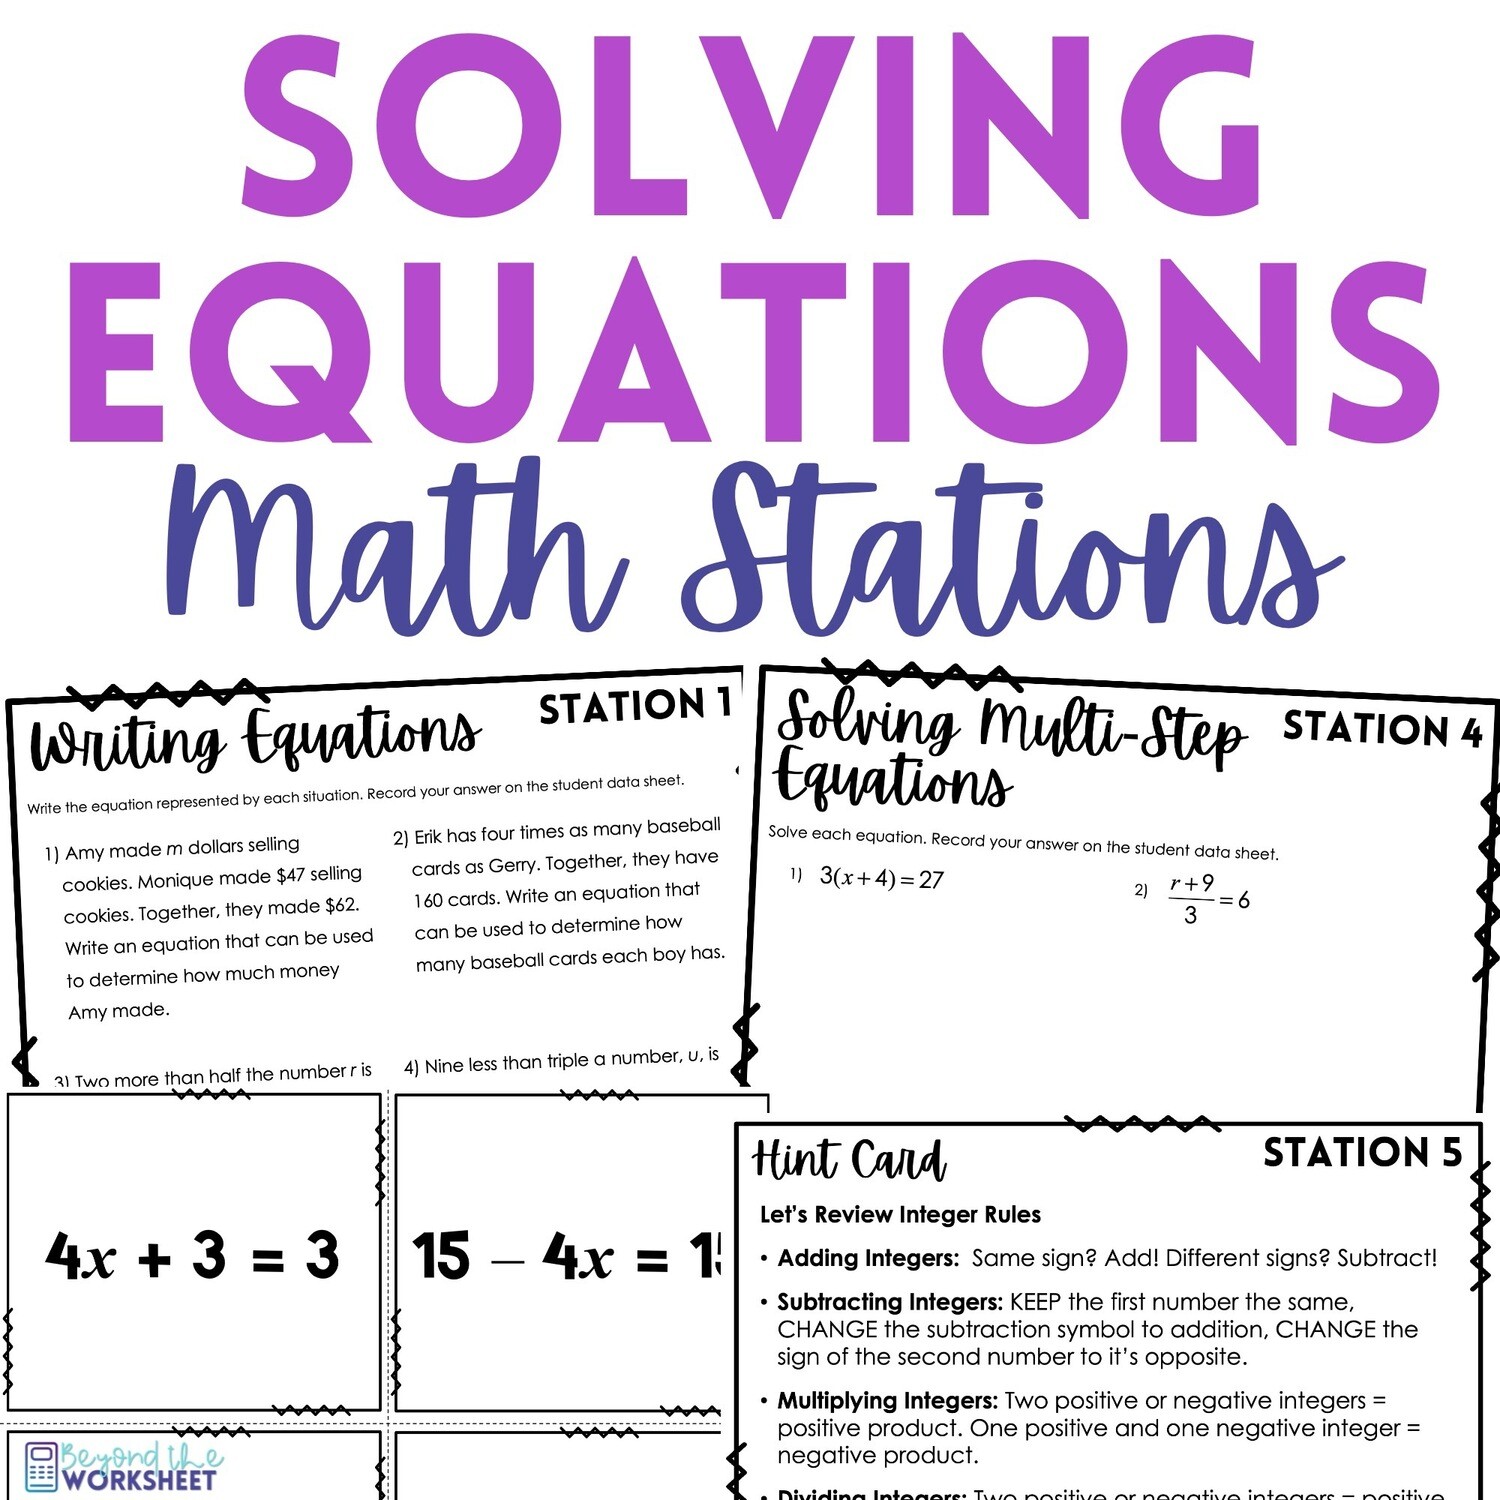 Solving Equations Math Stations